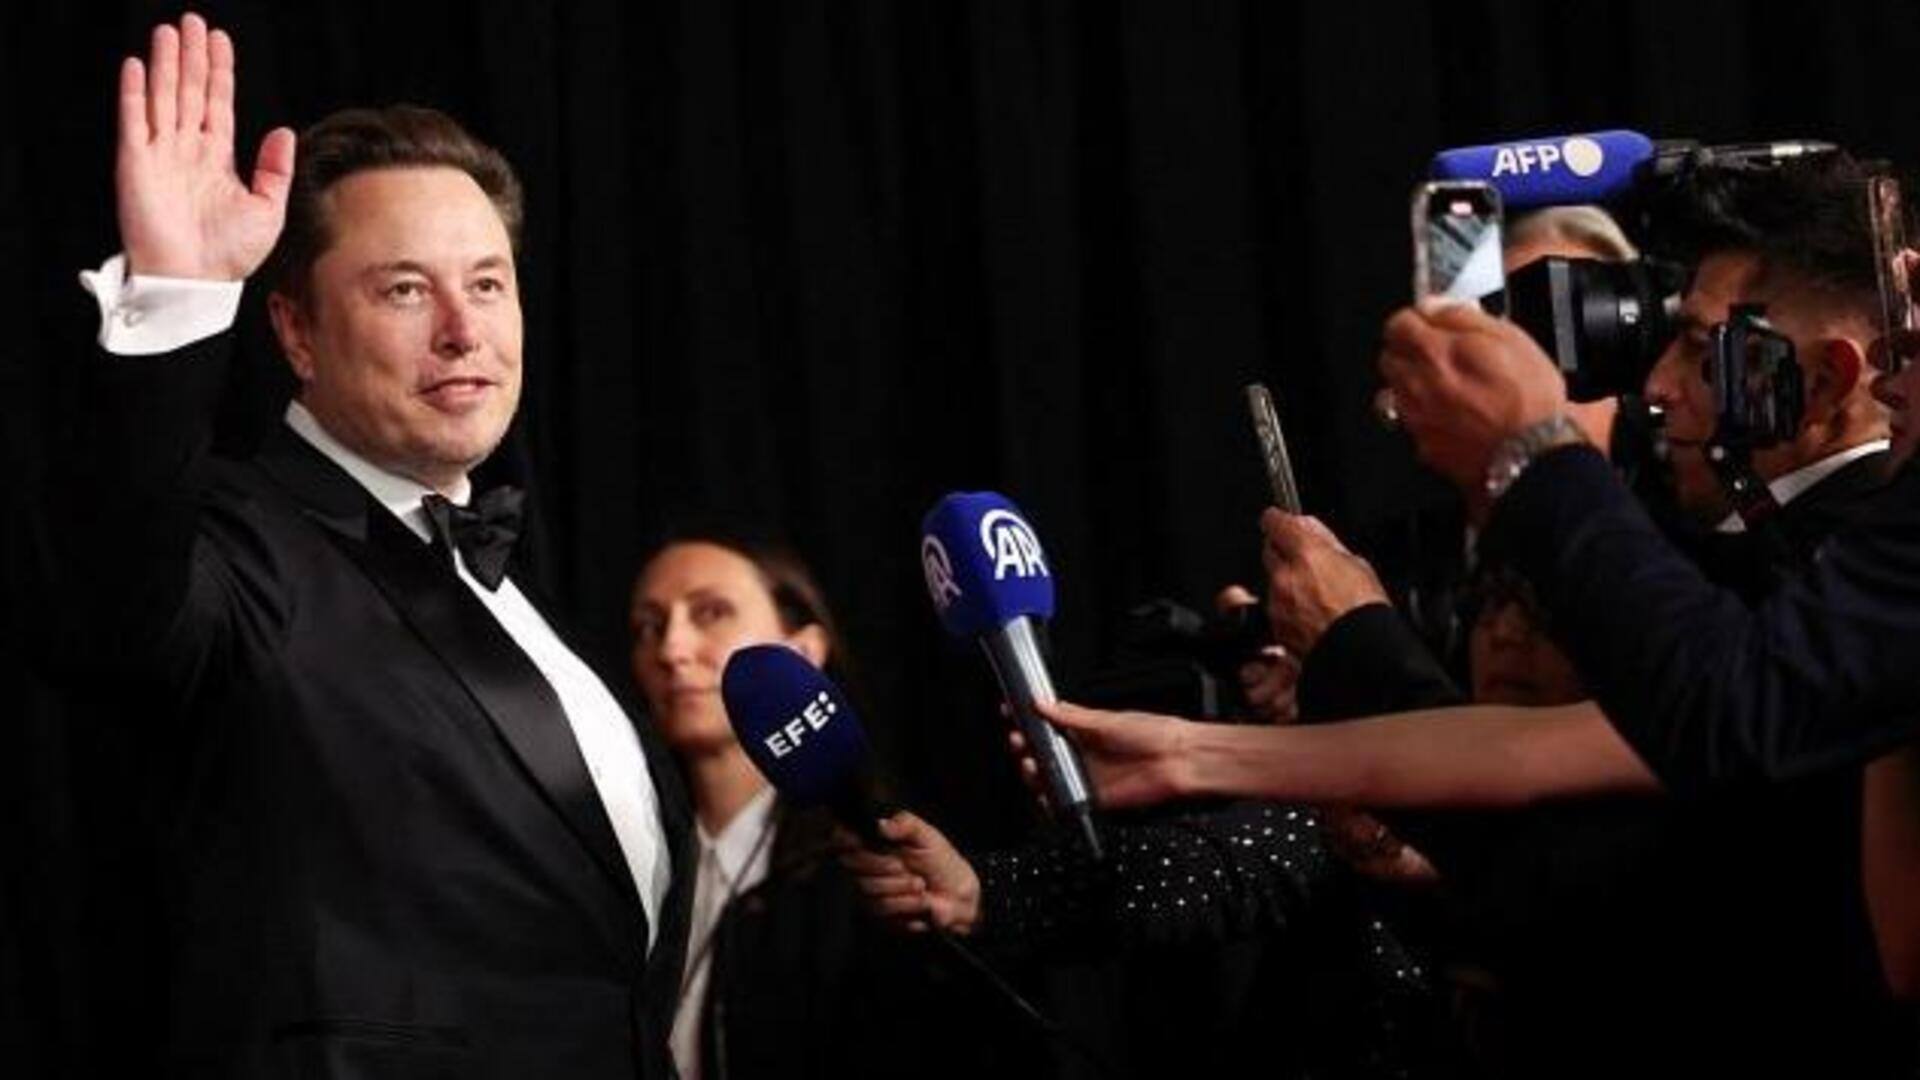 Elone Musk-India Visit-Postphoned: టెస్లా అధినేత ఎలాన్ మస్క్ భారత పర్యటన వాయిదా